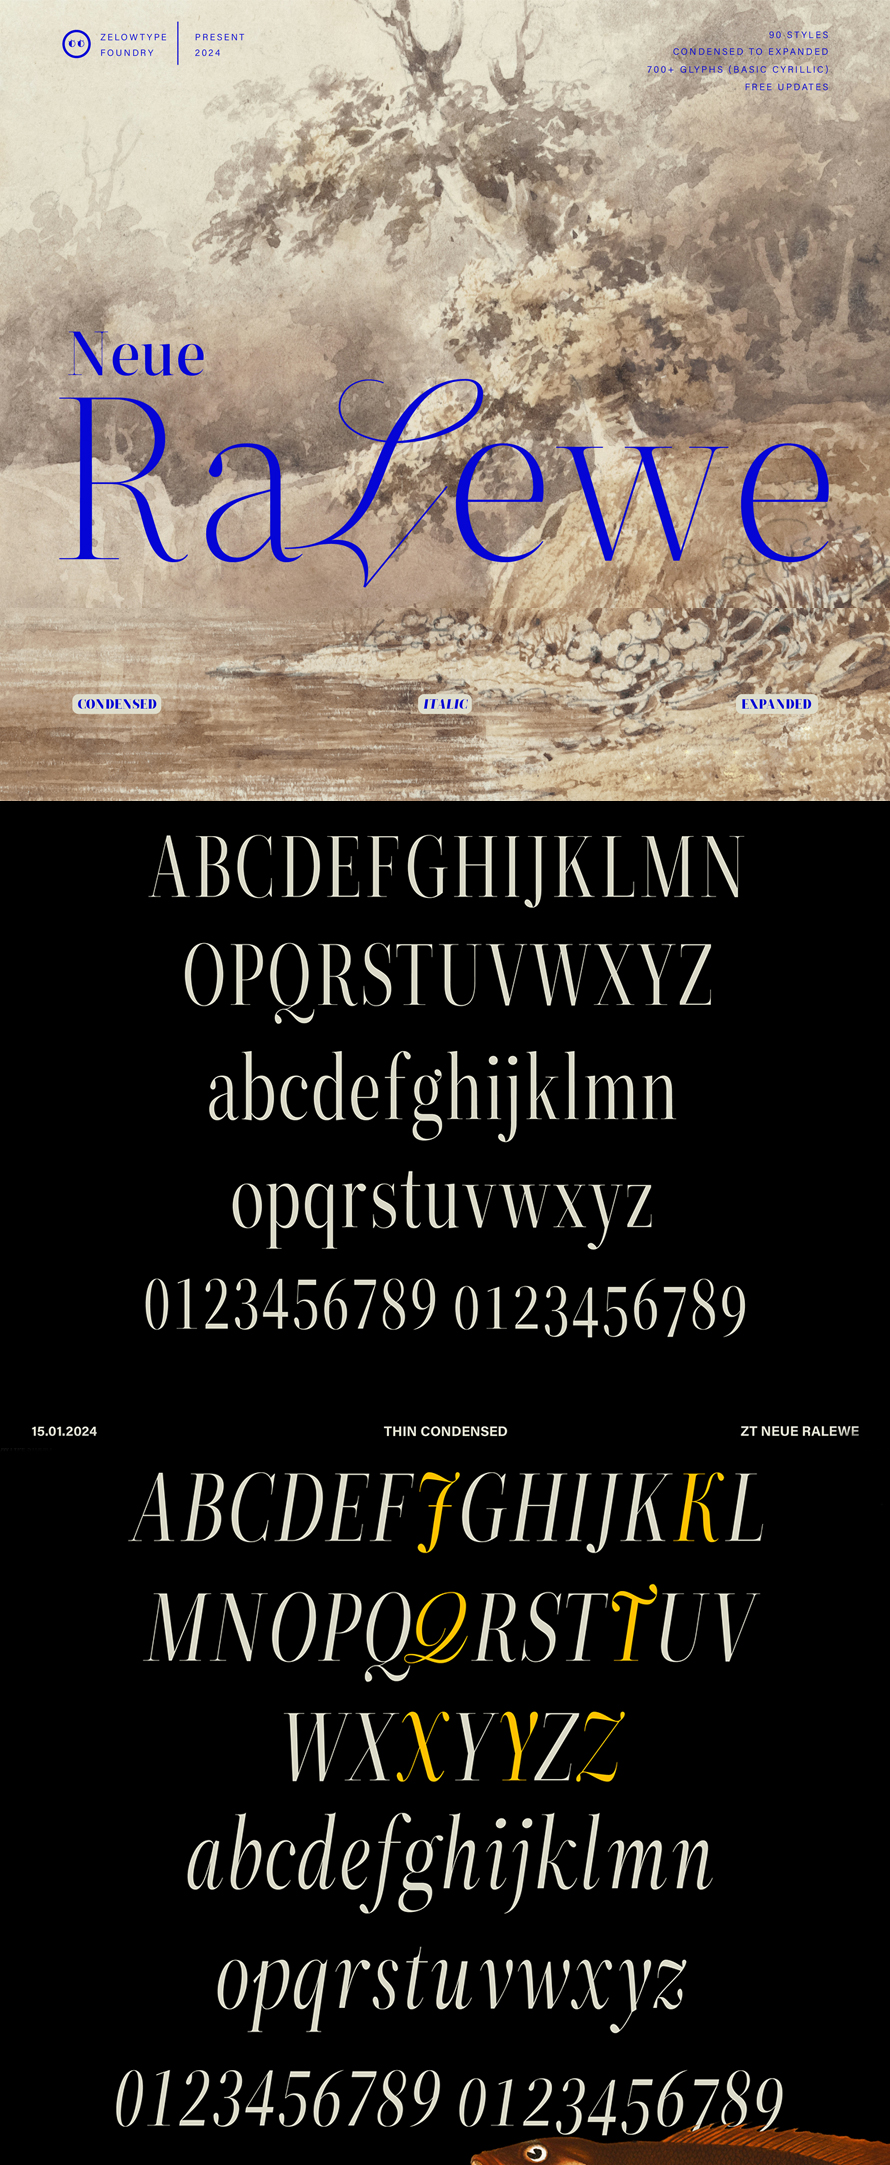 ZT Neue Ralewe Free Serif Font